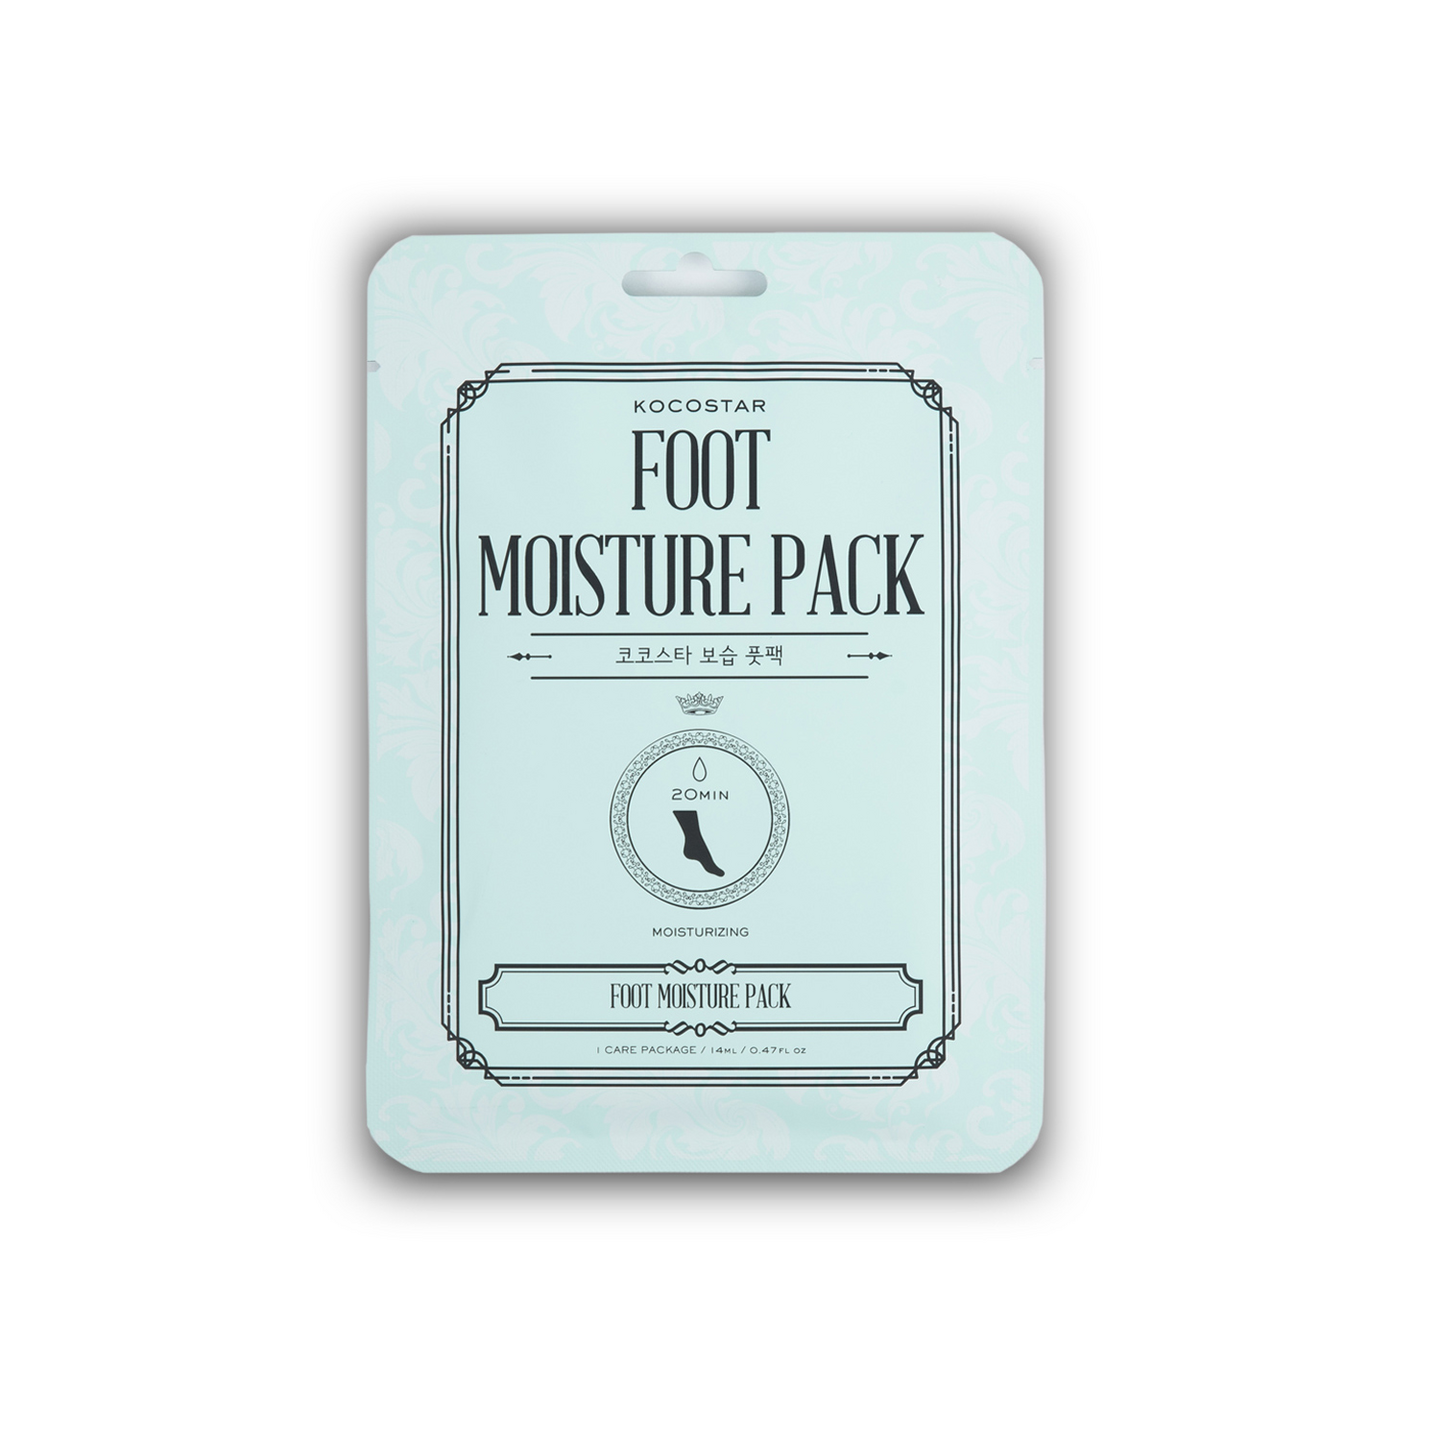 Kocostar Foot Moisture Pack jalkanaamio 1 pari